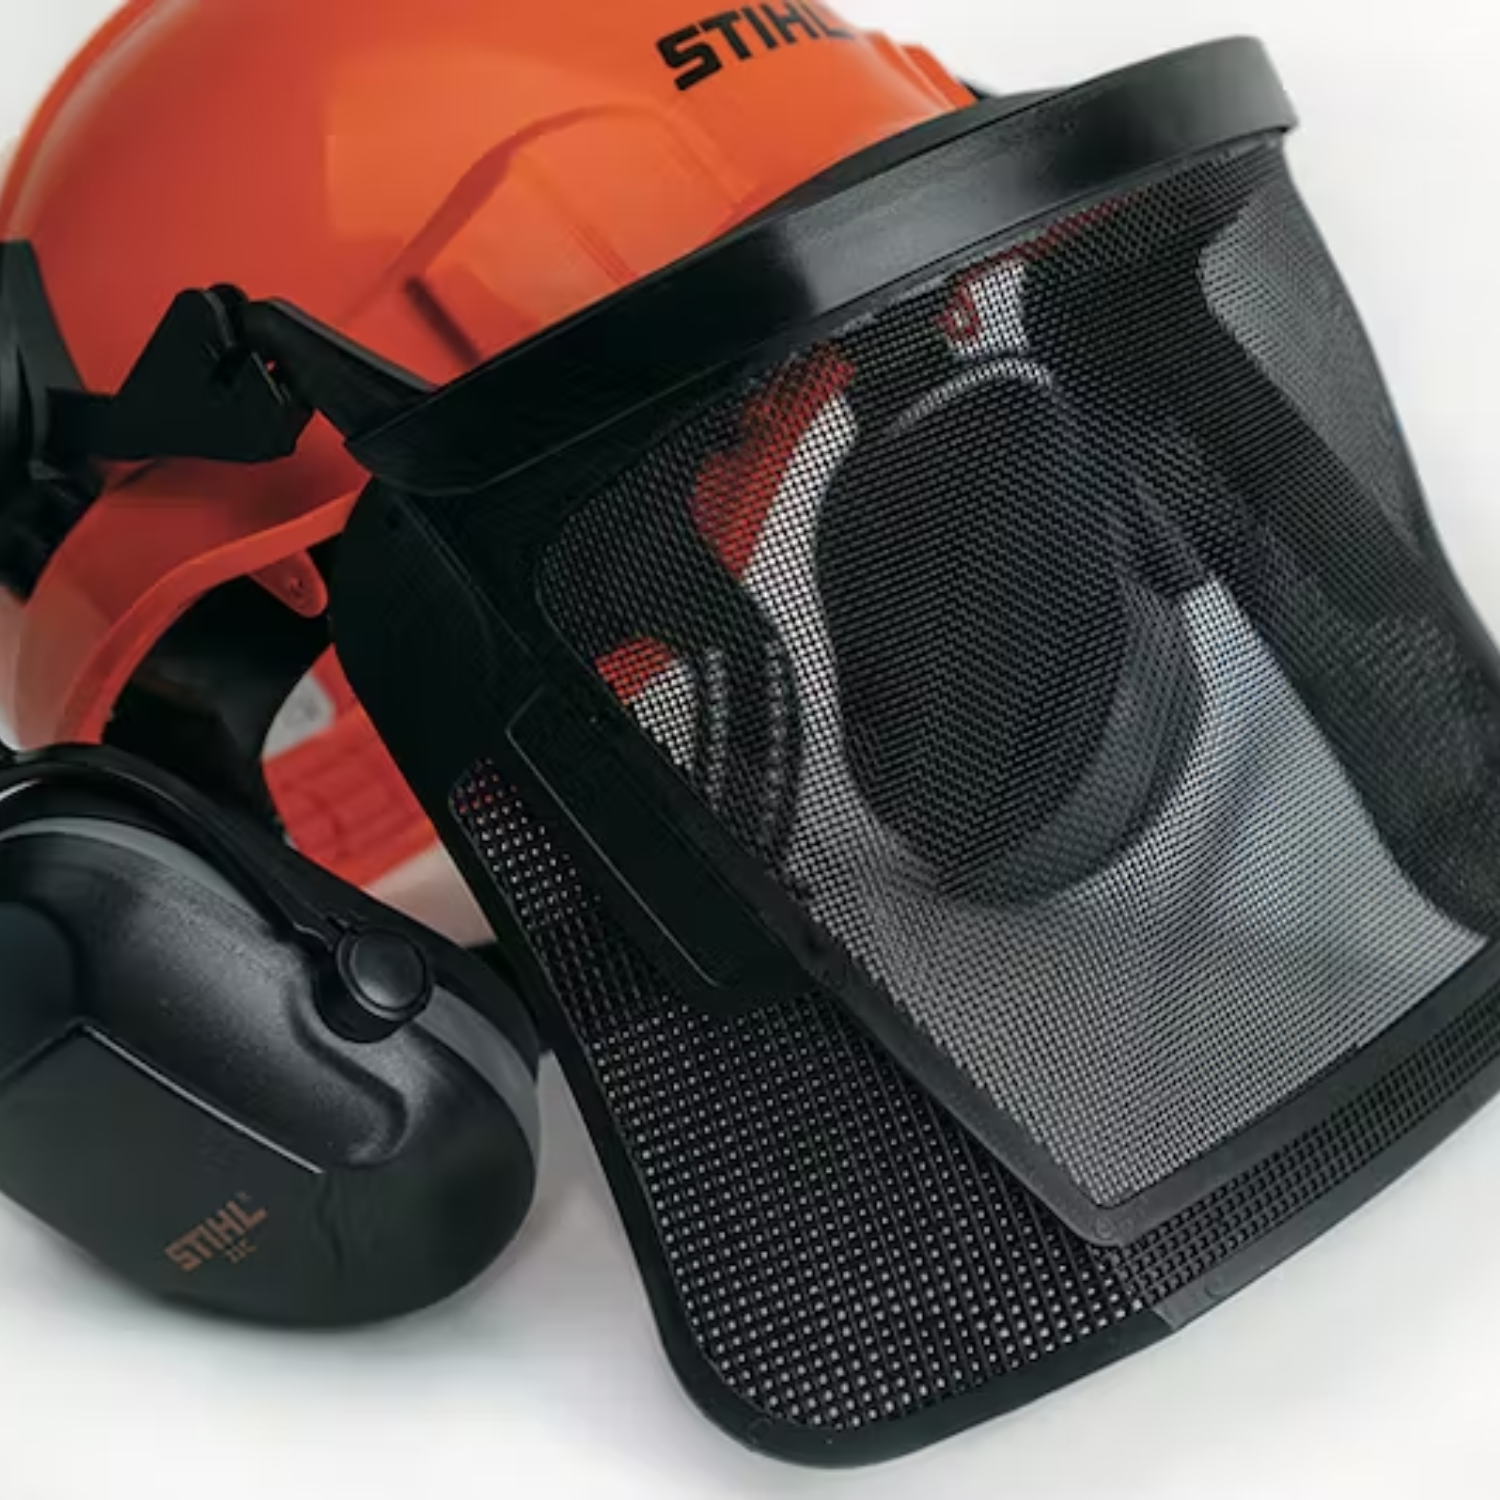 Stihl Function Basic Helmet System 7010 888 0800 - Main Street Mower | Winter Garden, Ocala, Clermont